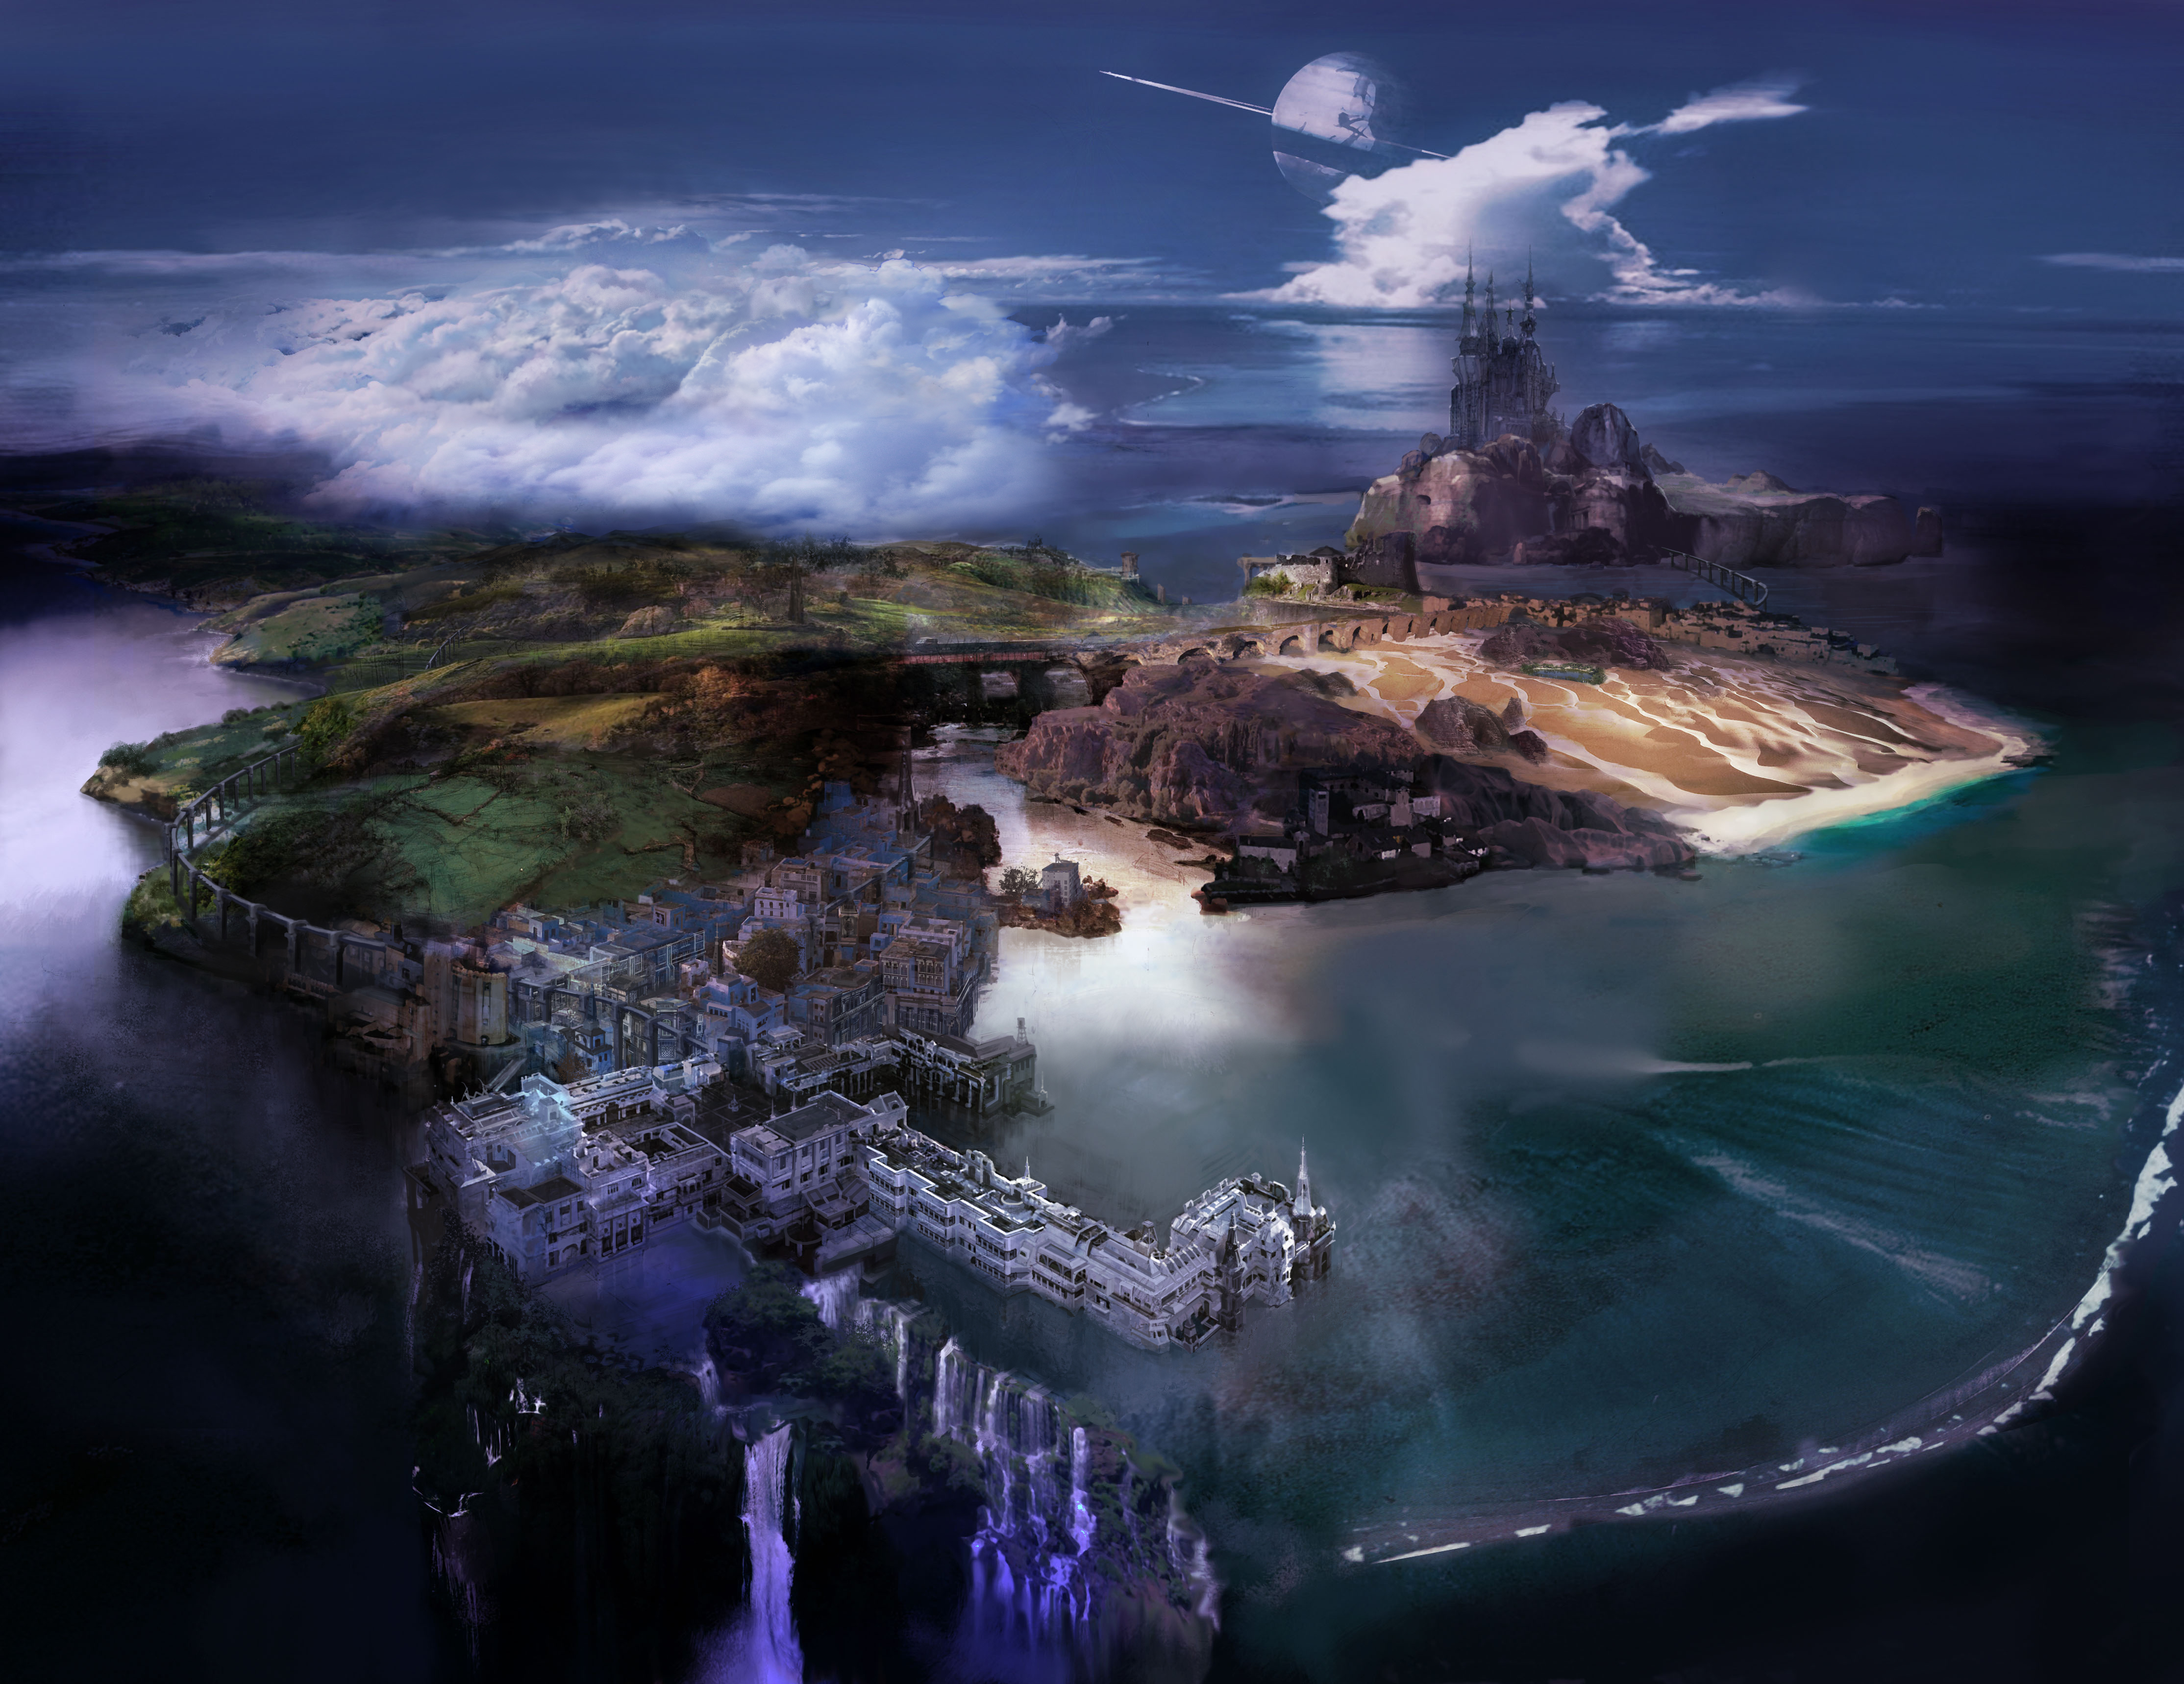 Final Fantasy XI Online (Game) - Giant Bomb